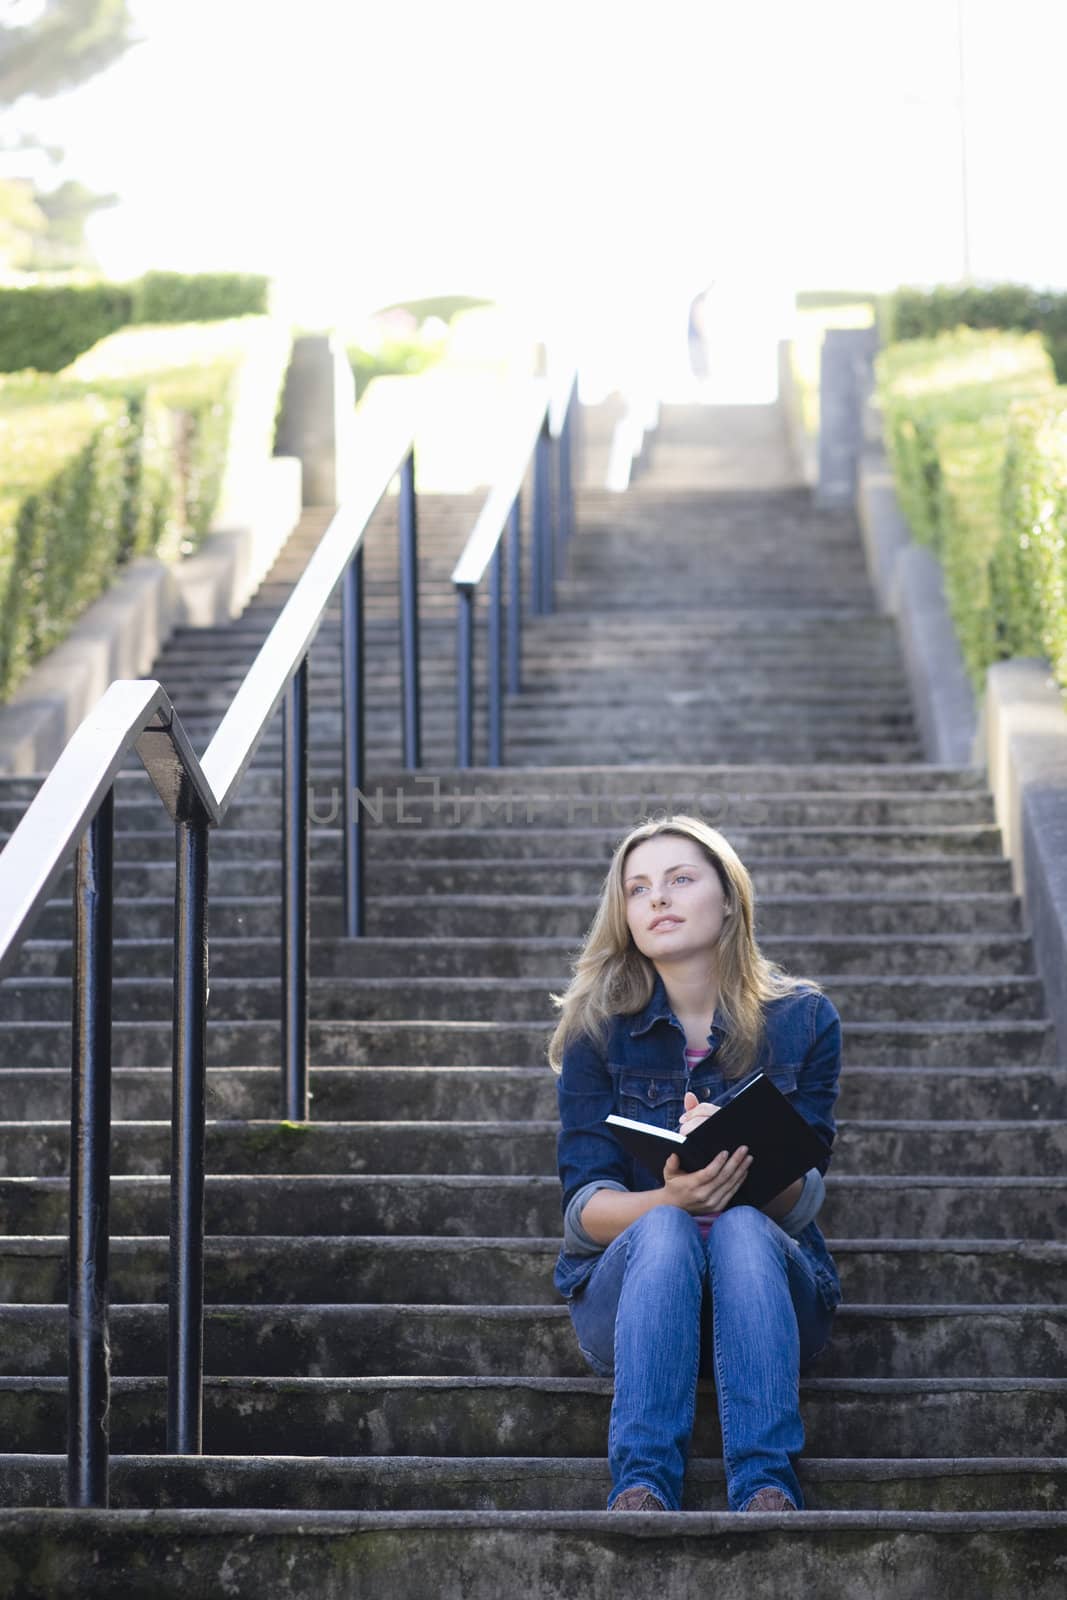 Pretty Blonde Teen Girl Sitting at Bottom of Stairway Writing in Journal